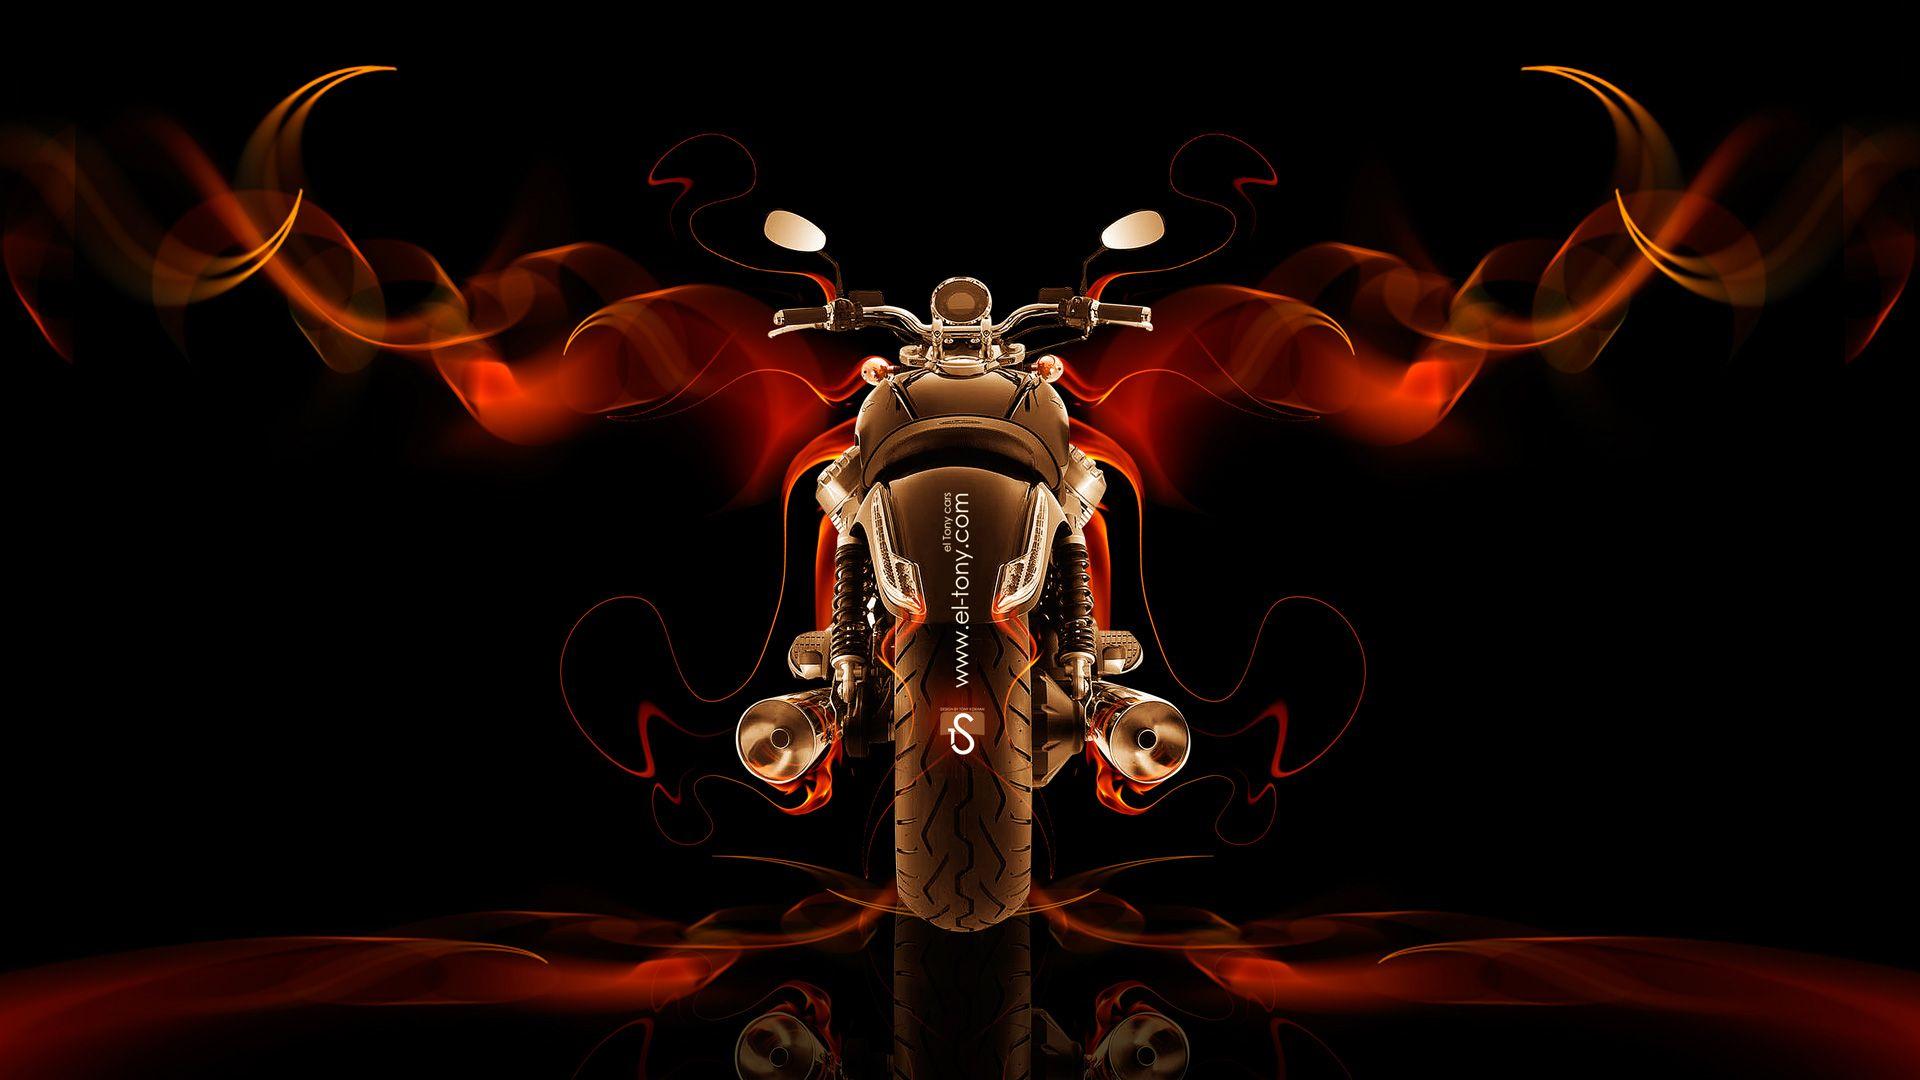 Moto Guzzi California Back Fire Abstract Bike 2014 HD Wallpaper